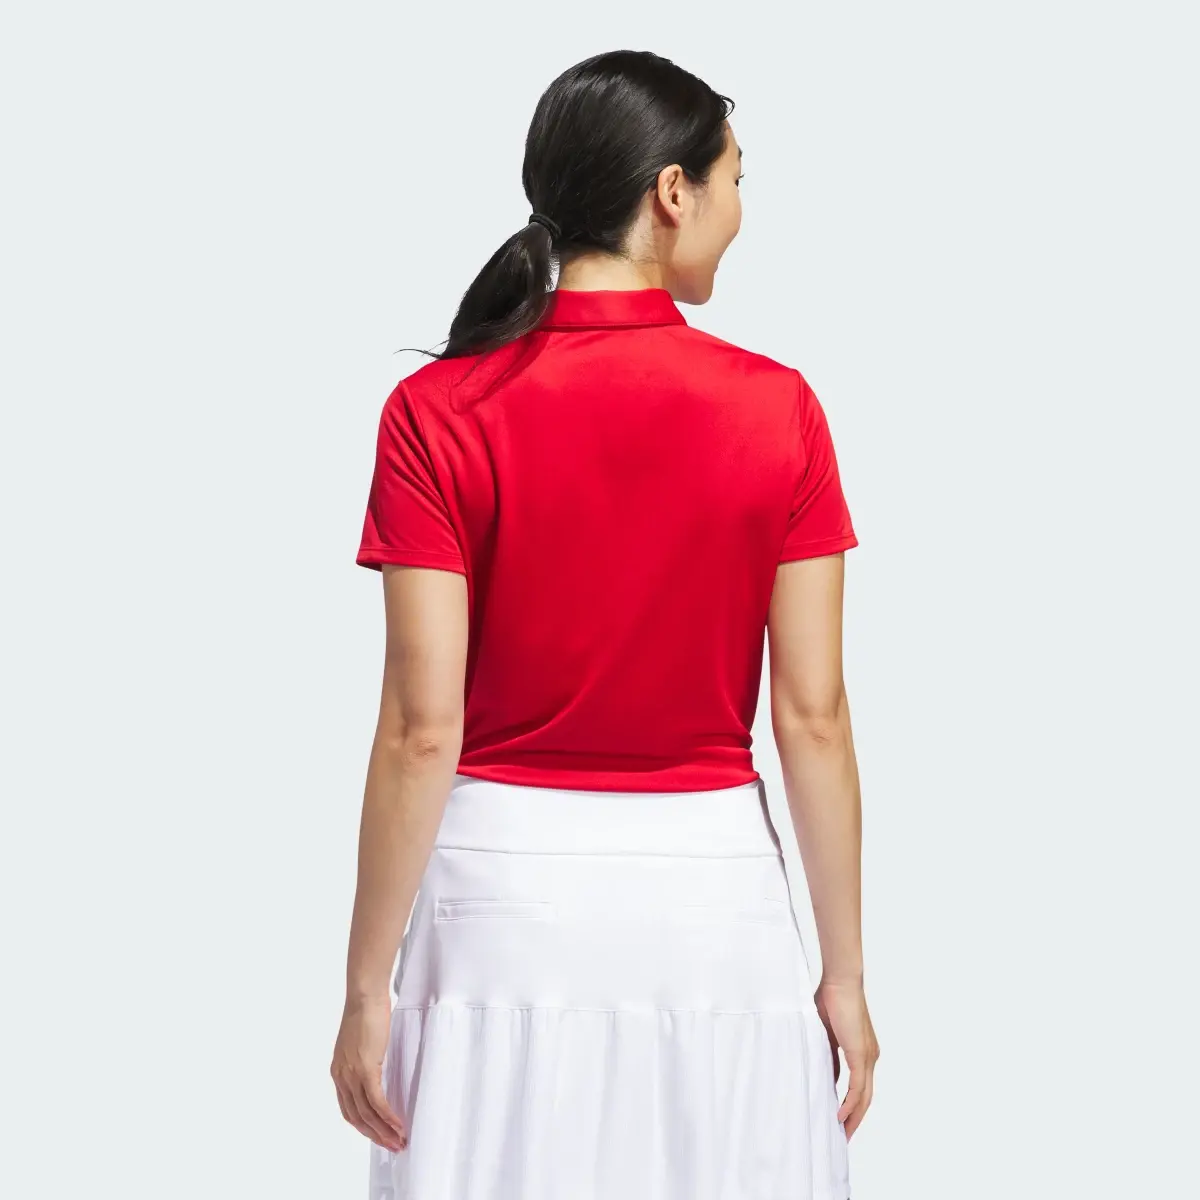 Adidas Women's Solid Performance Short Sleeve Polo Shirt. 3